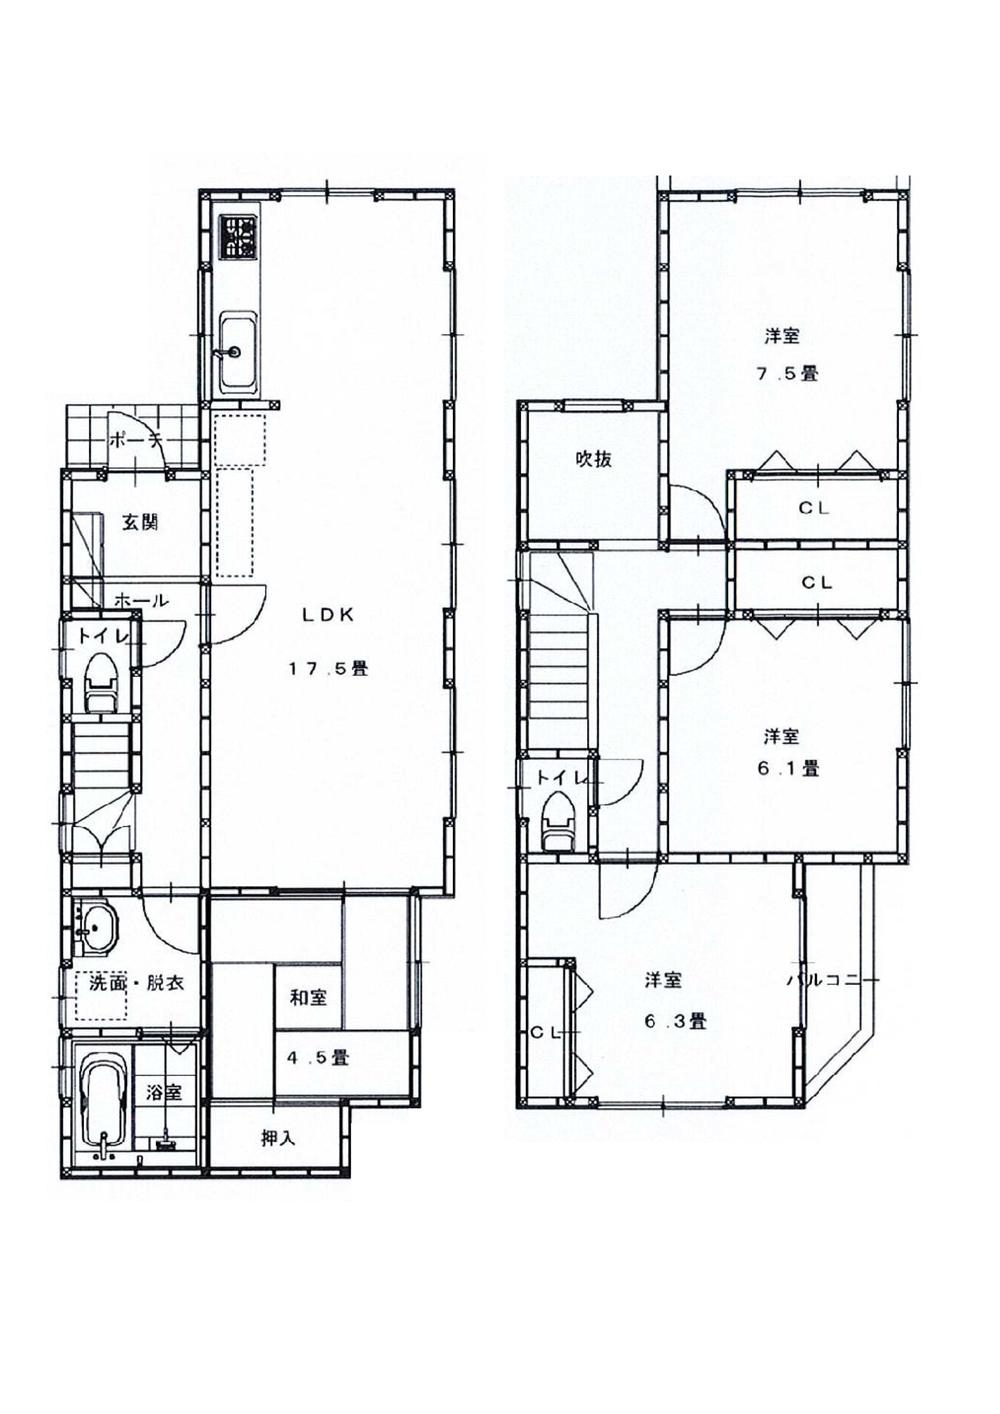 Building plan example (floor plan). Building plan example (1 Building) 4LDK, Land price 23,300,000 yen, Land area 100.58 sq m , Building price 15 million yen, Building area 101.23 sq m